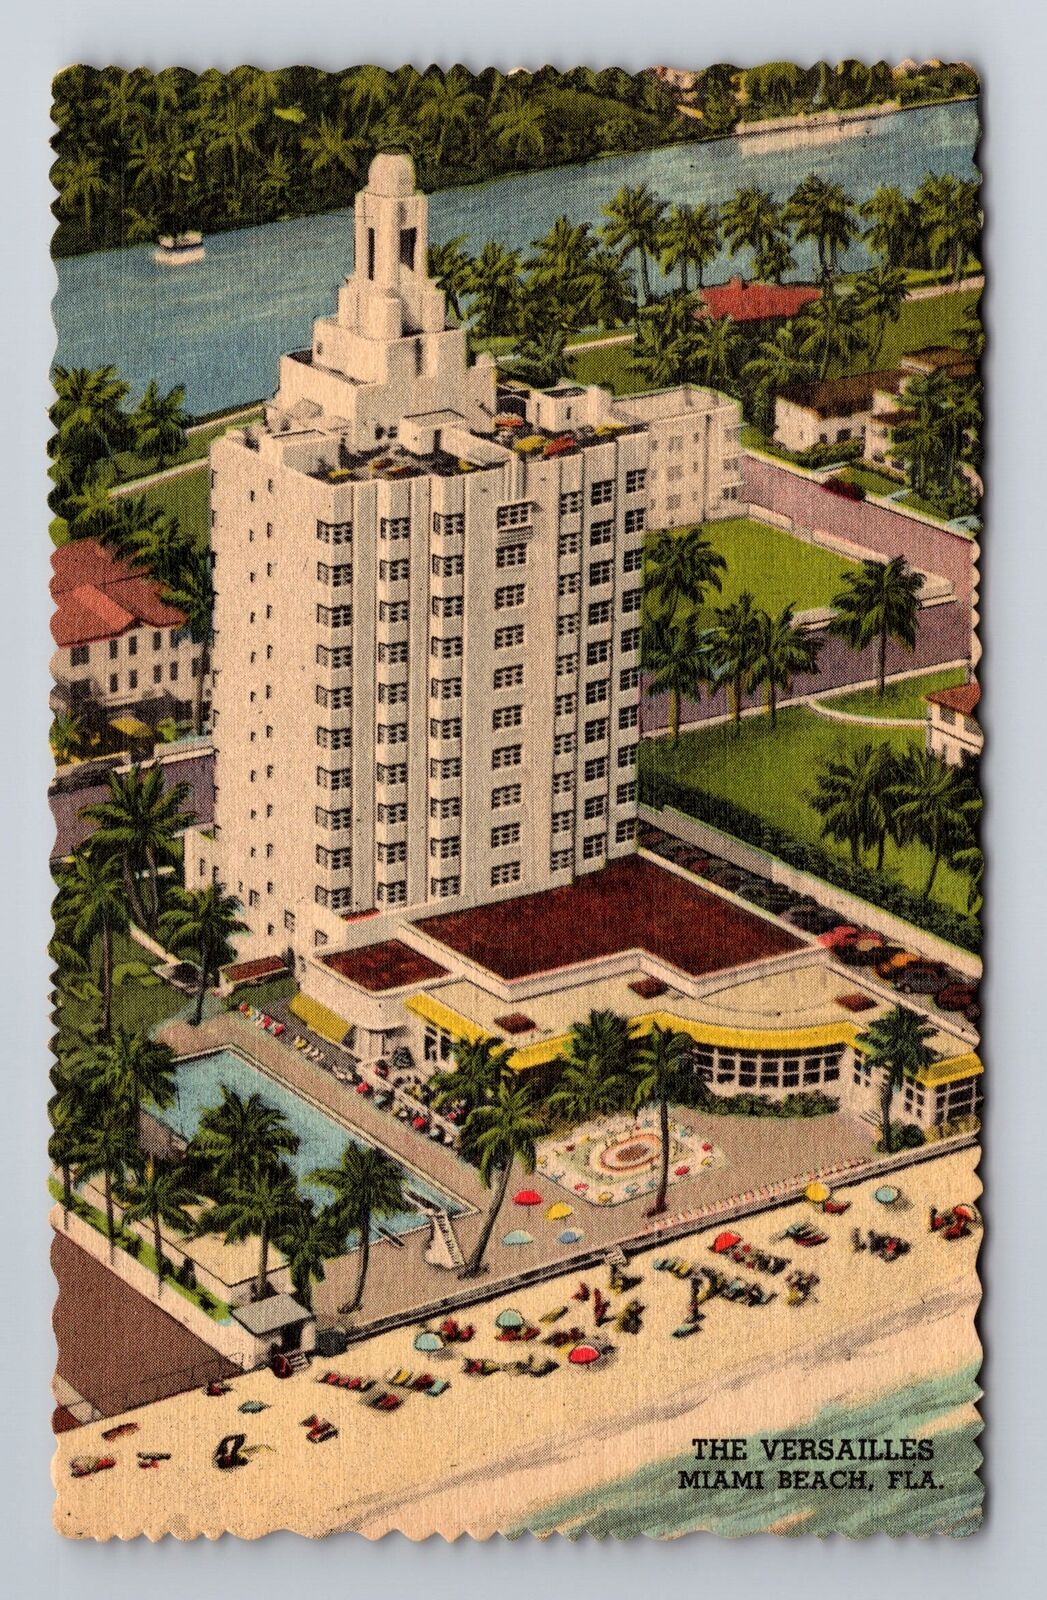 Miami Beach FL-Florida, The Versailles, Advertising, Vintage c1954 Postcard